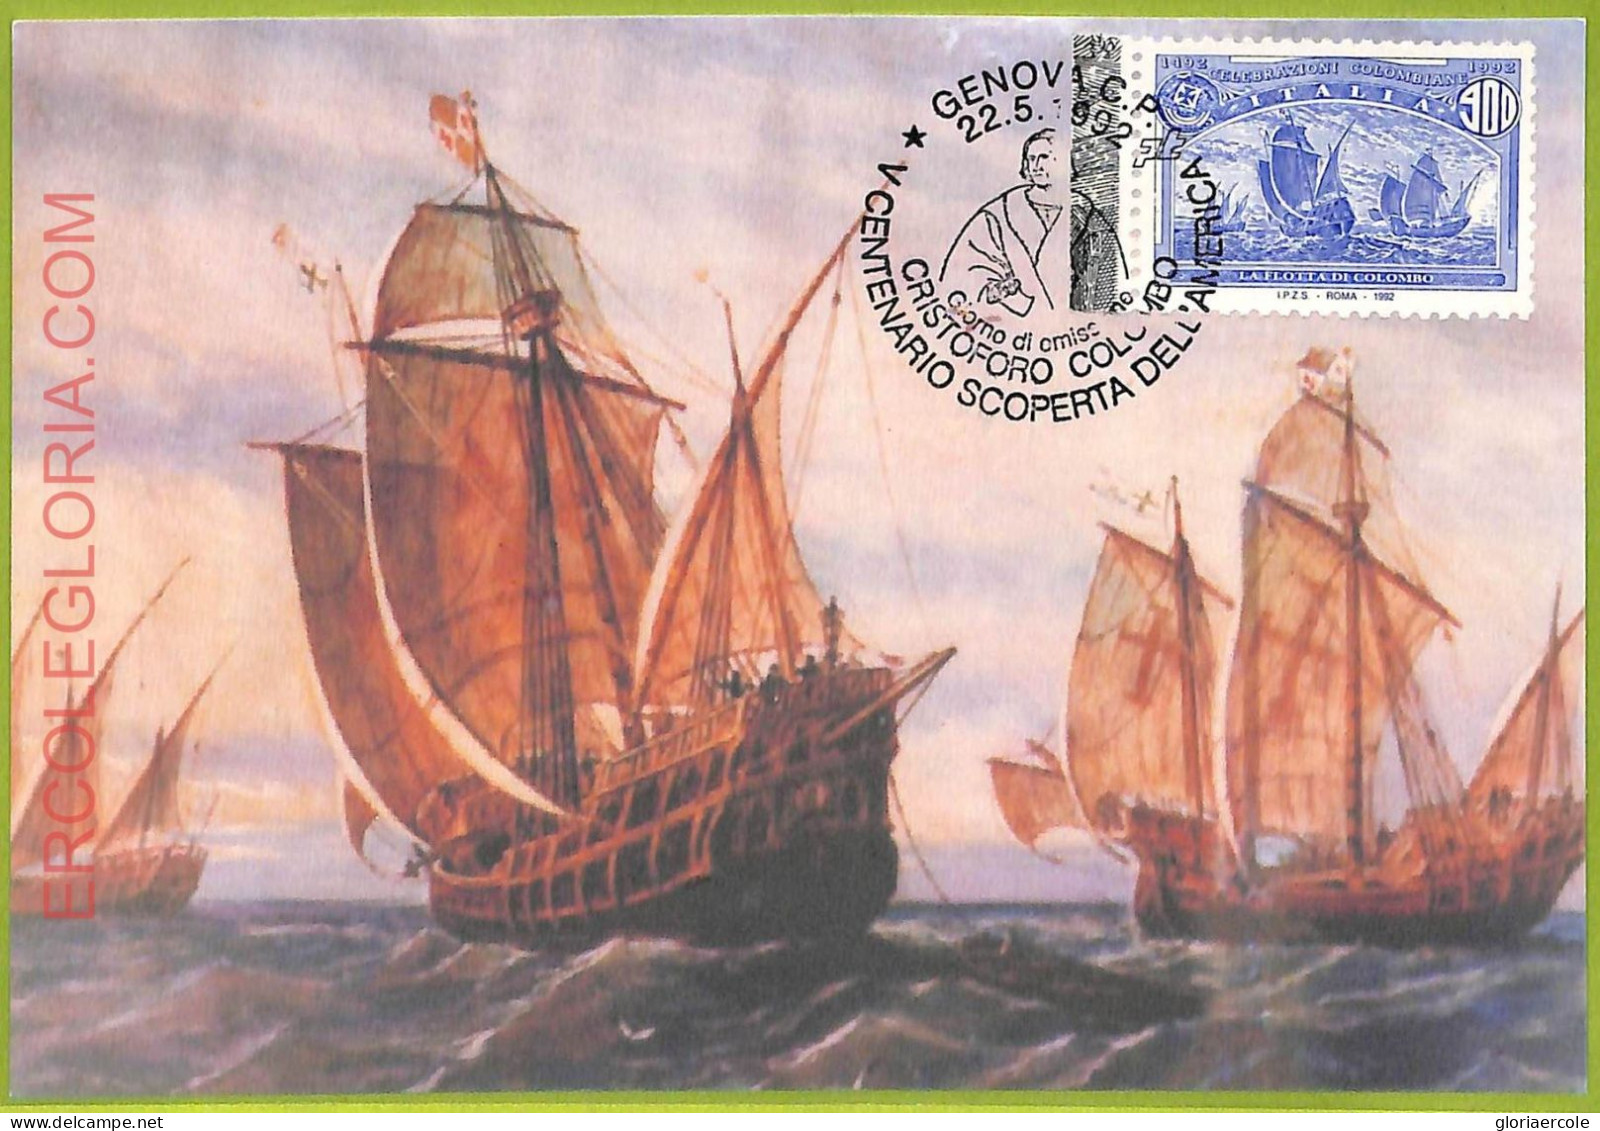 Ad3386 - ITALY - Postal History - MAXIMUM CARD - FDC - 1992 - Ship - Ships